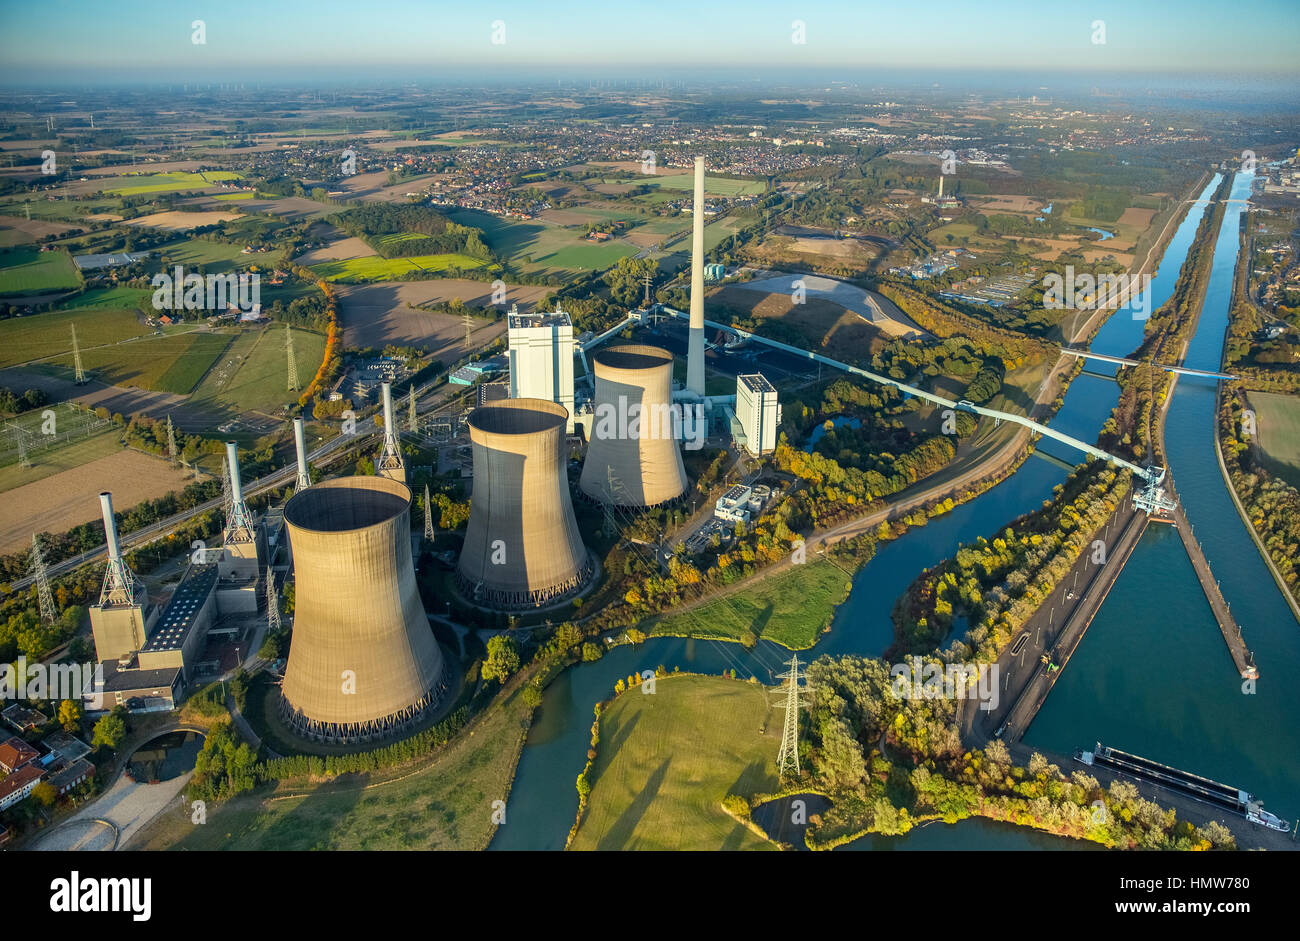 RWE power plant, Werne, Ruhr district, North Rhine-Westphalia, Germany Stock Photo